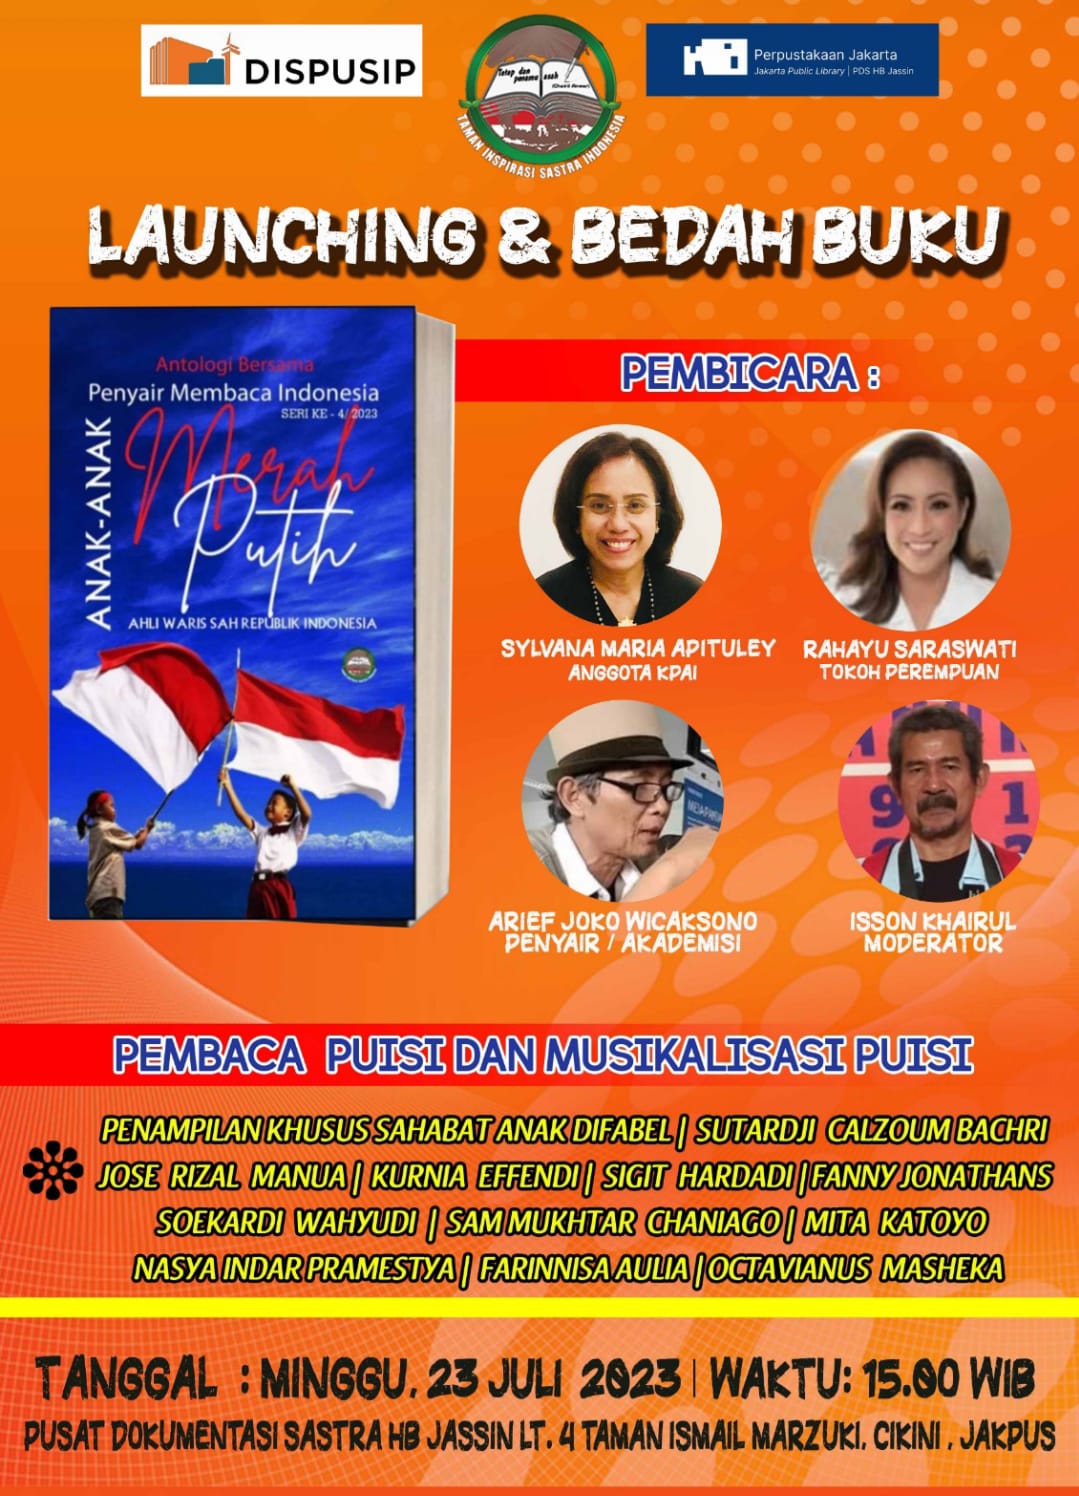 Launcing & Bedah Buku "Anak-anak Merah Putih Ahli Waris Sah Republik Indonesia"